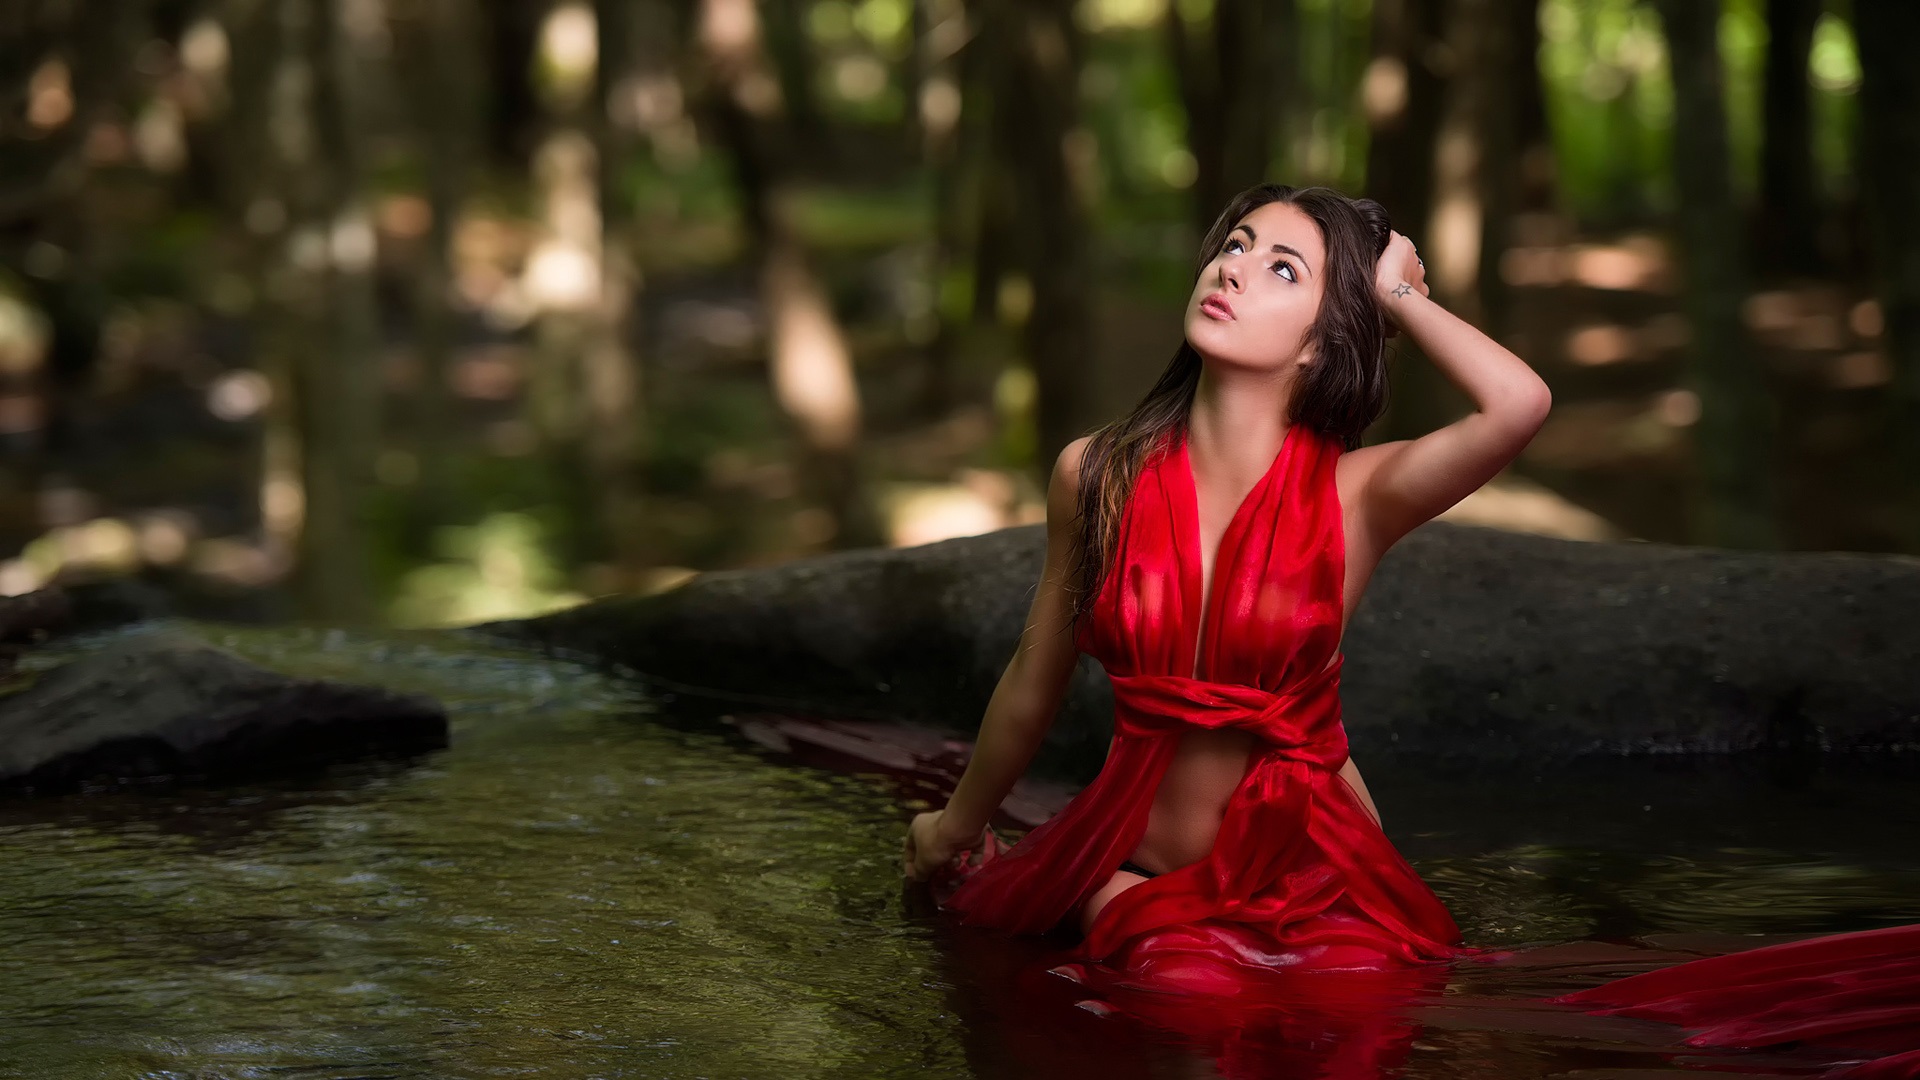 Red dress girl in water wallpaper | girls | Wallpaper Better